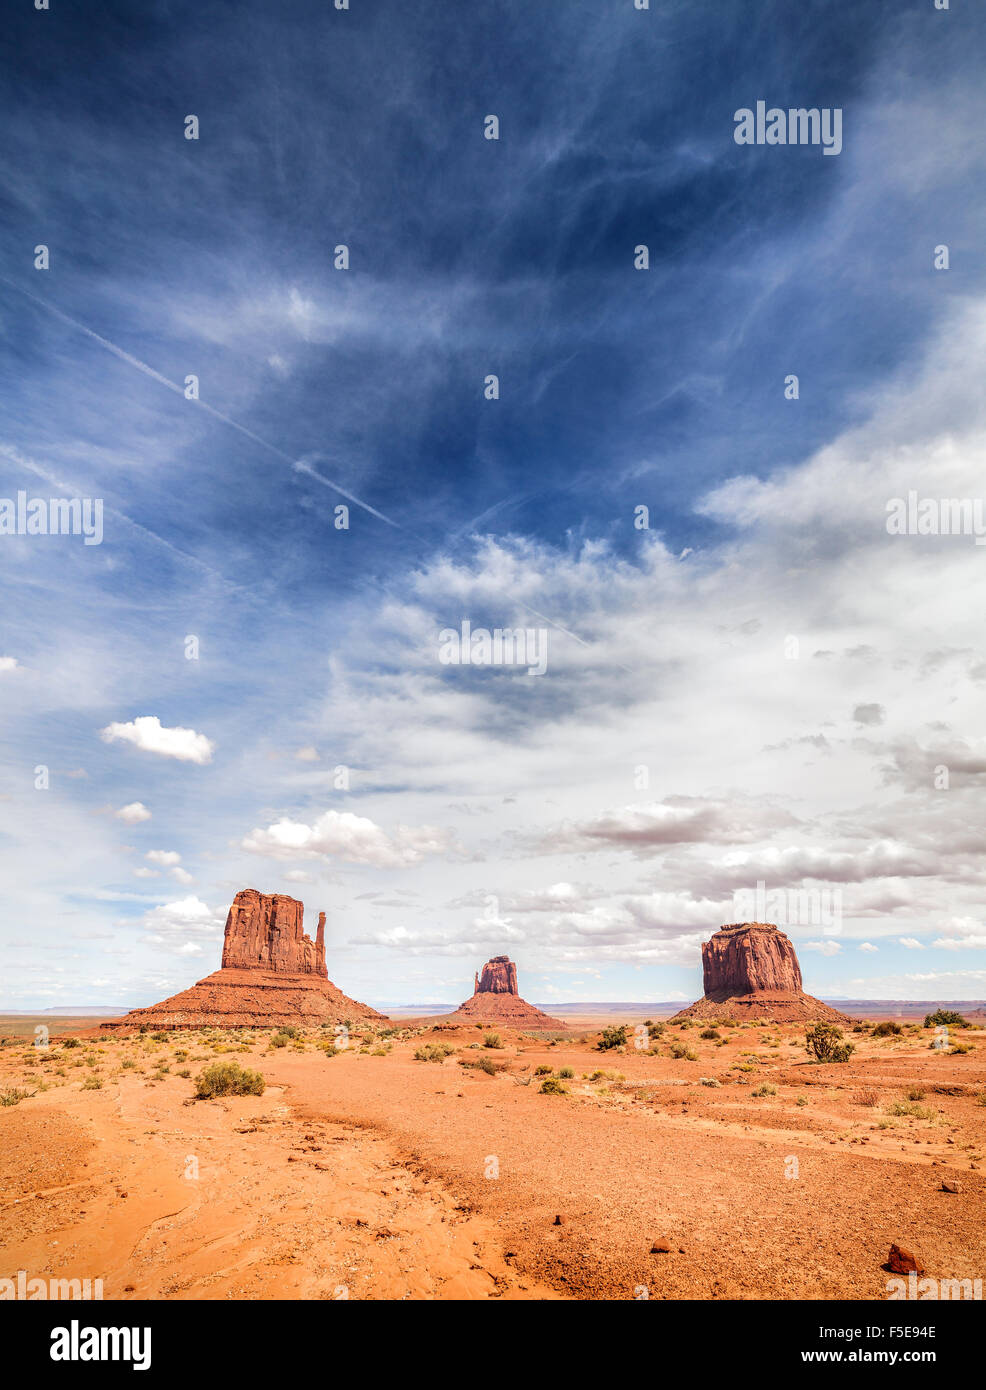 Schöne Wolkengebilde über Monument Valley Navajo Tribal Park, Utah, USA. Stockfoto